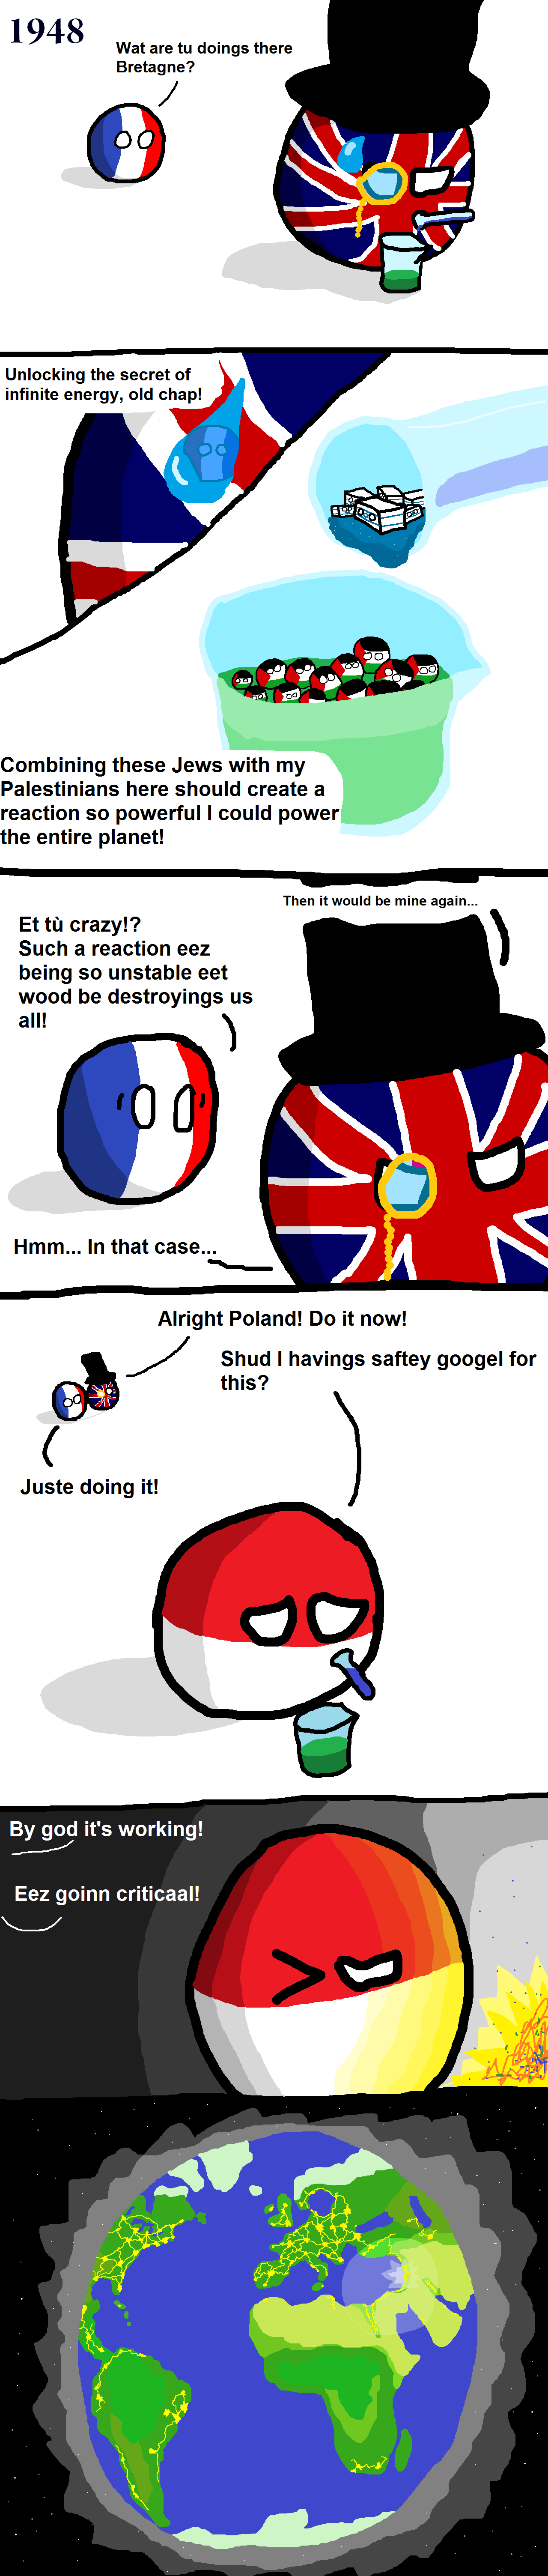 England makes energy